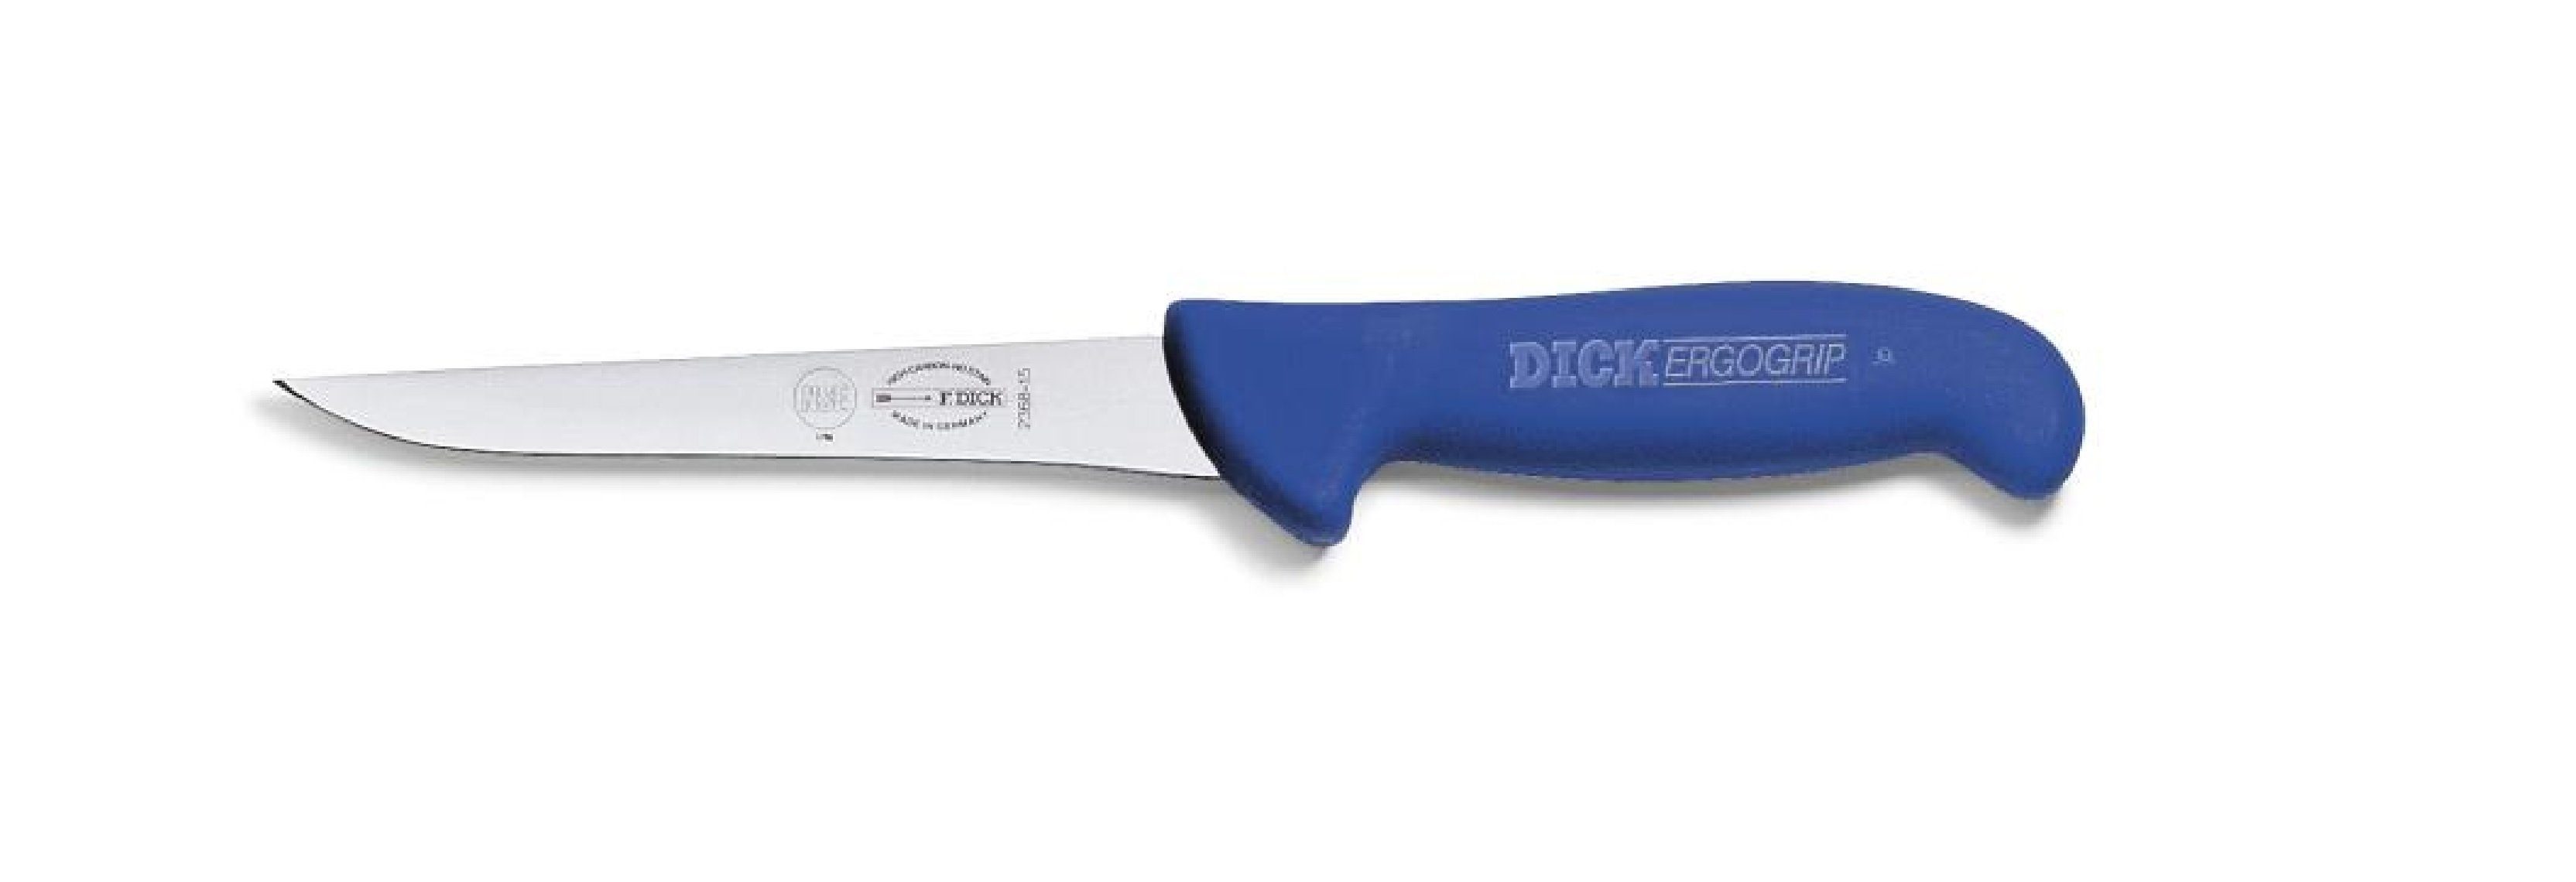 Dick Ausbeinmesser Dick 8236815 Klinge Messer 15 cm Ausbeinmesser schmale Ergogrip